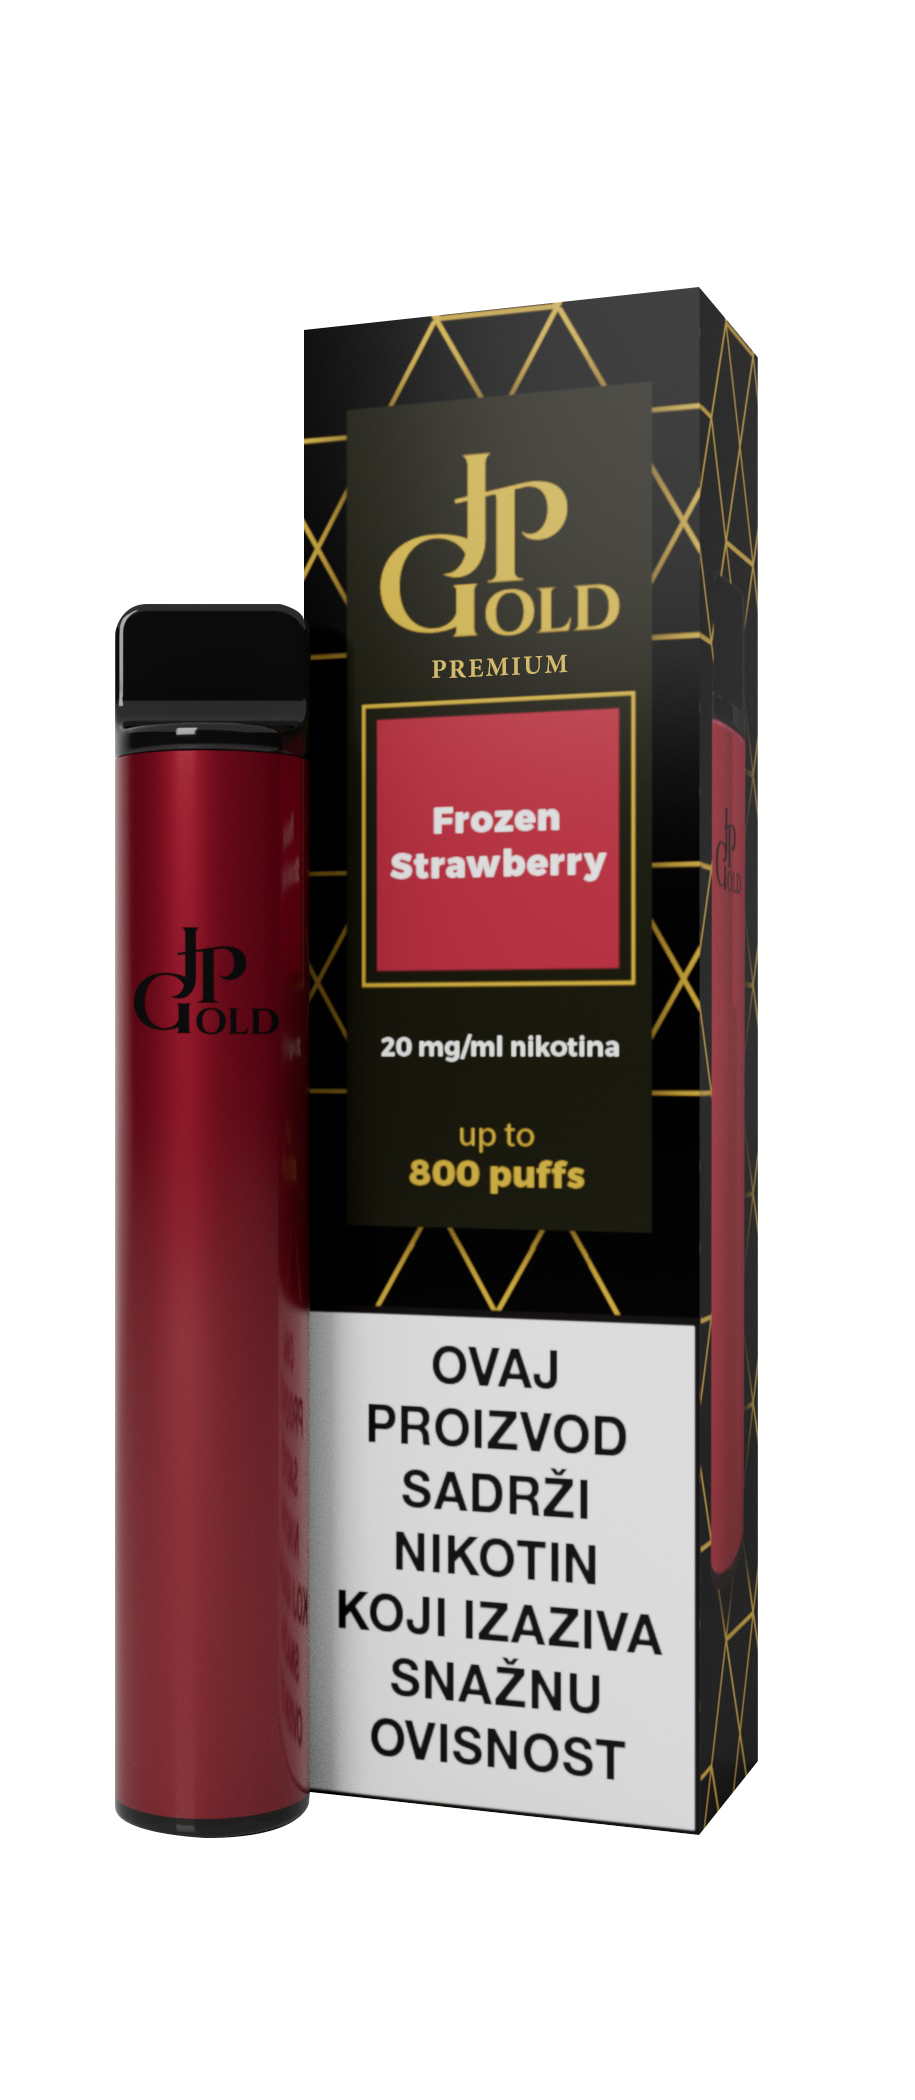 JP GOLD Premium, Frozen Strawberry, 20mg nicotine